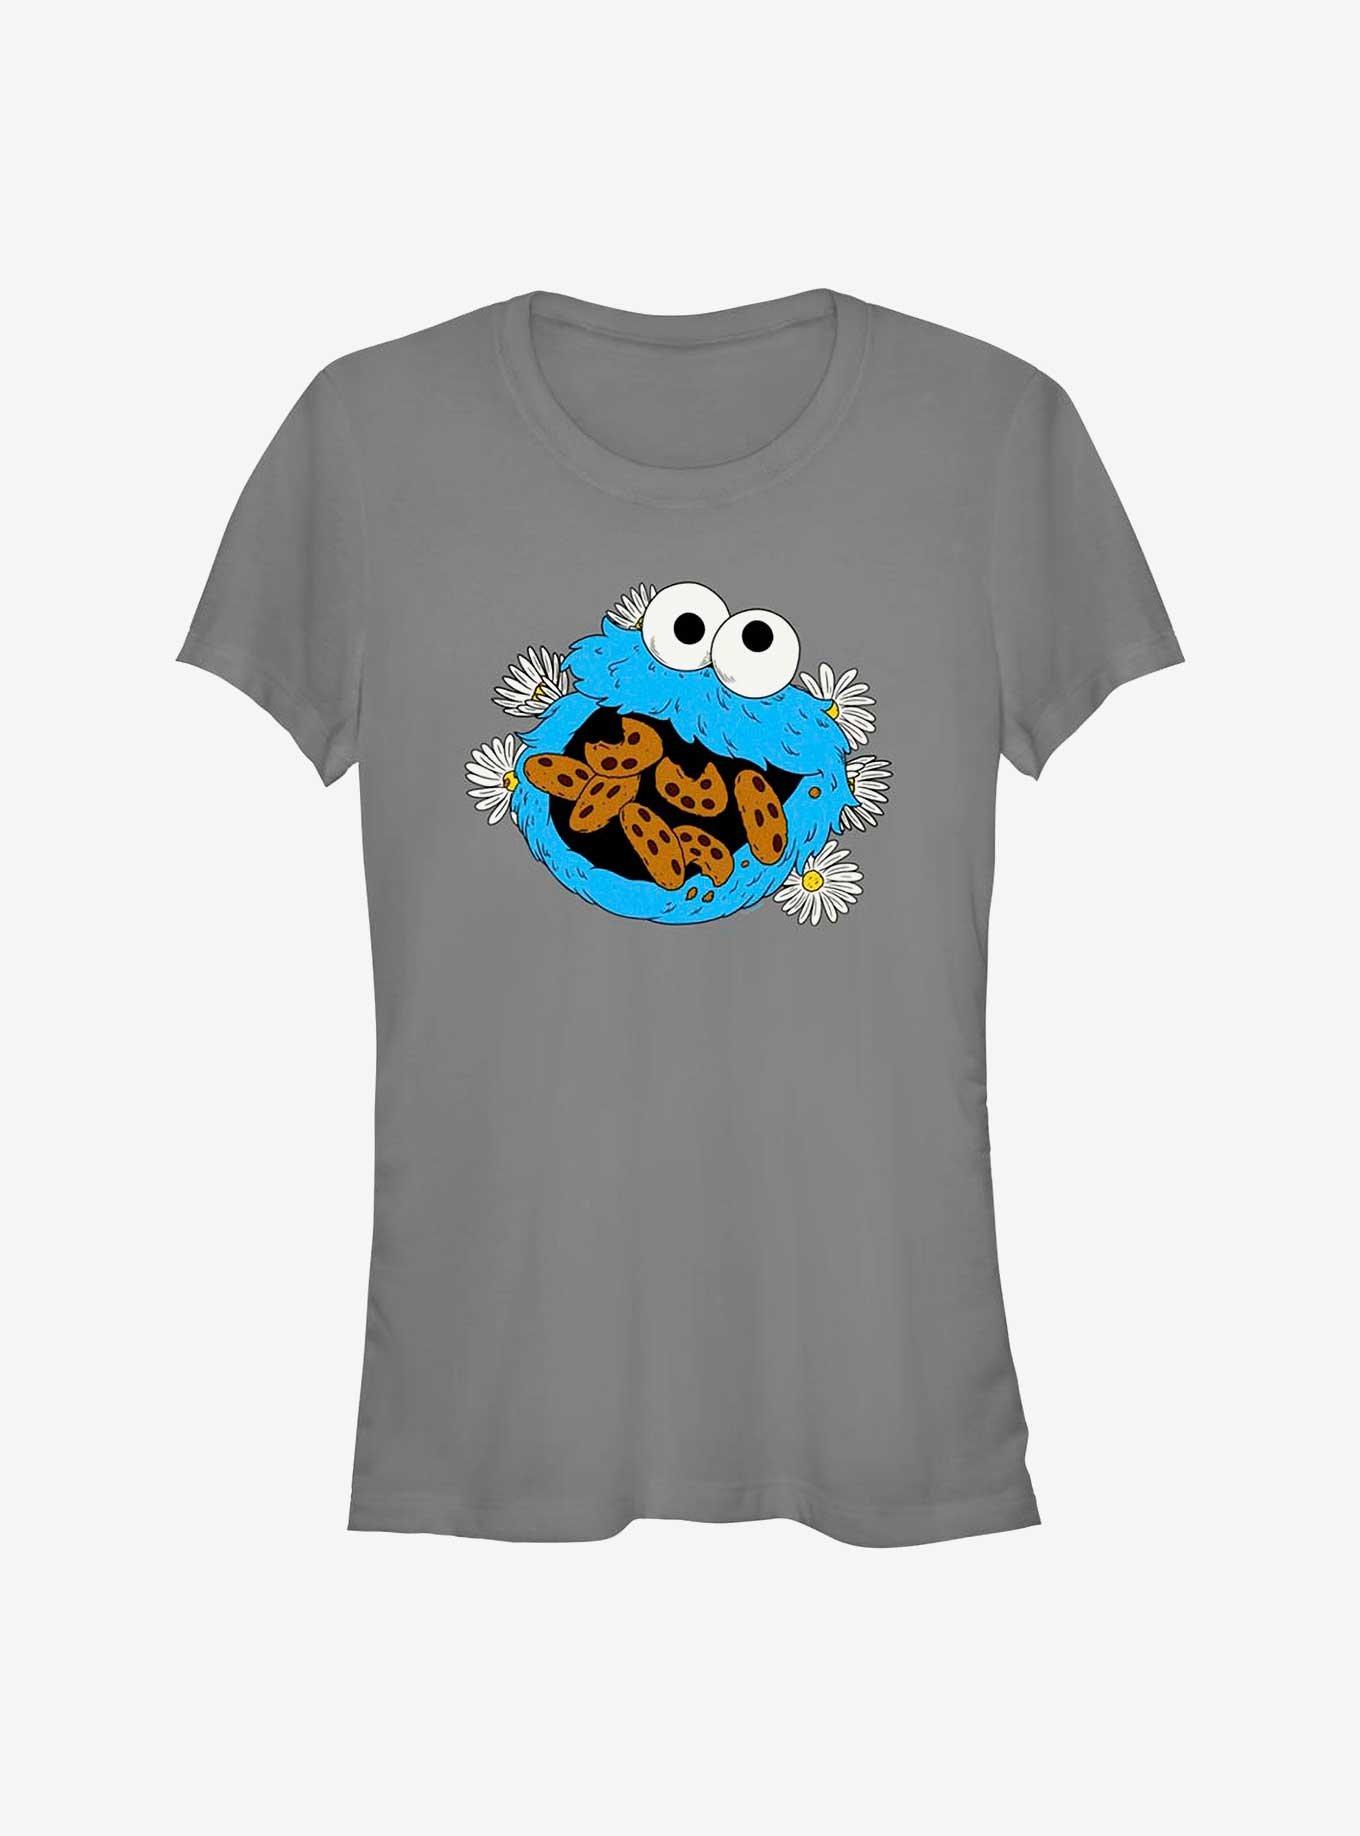 Hot Topic Sesame Street Cookie Monster Eat Cookies Girls T-Shirt Grey